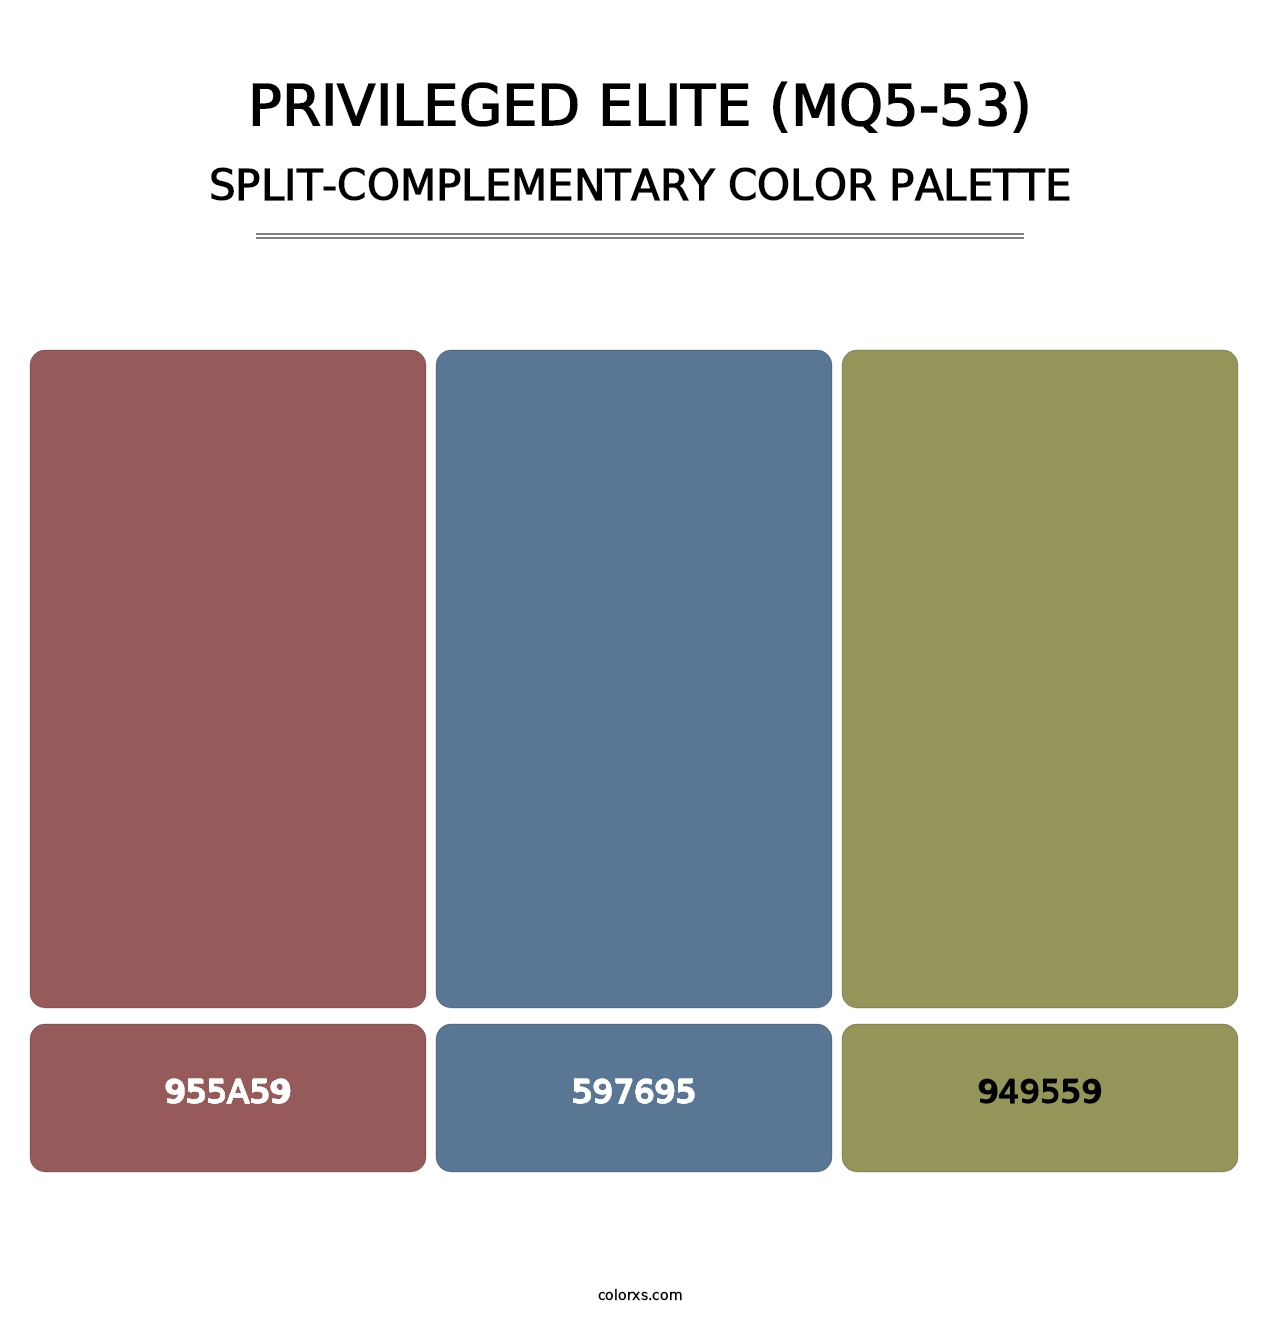 Privileged Elite (MQ5-53) - Split-Complementary Color Palette